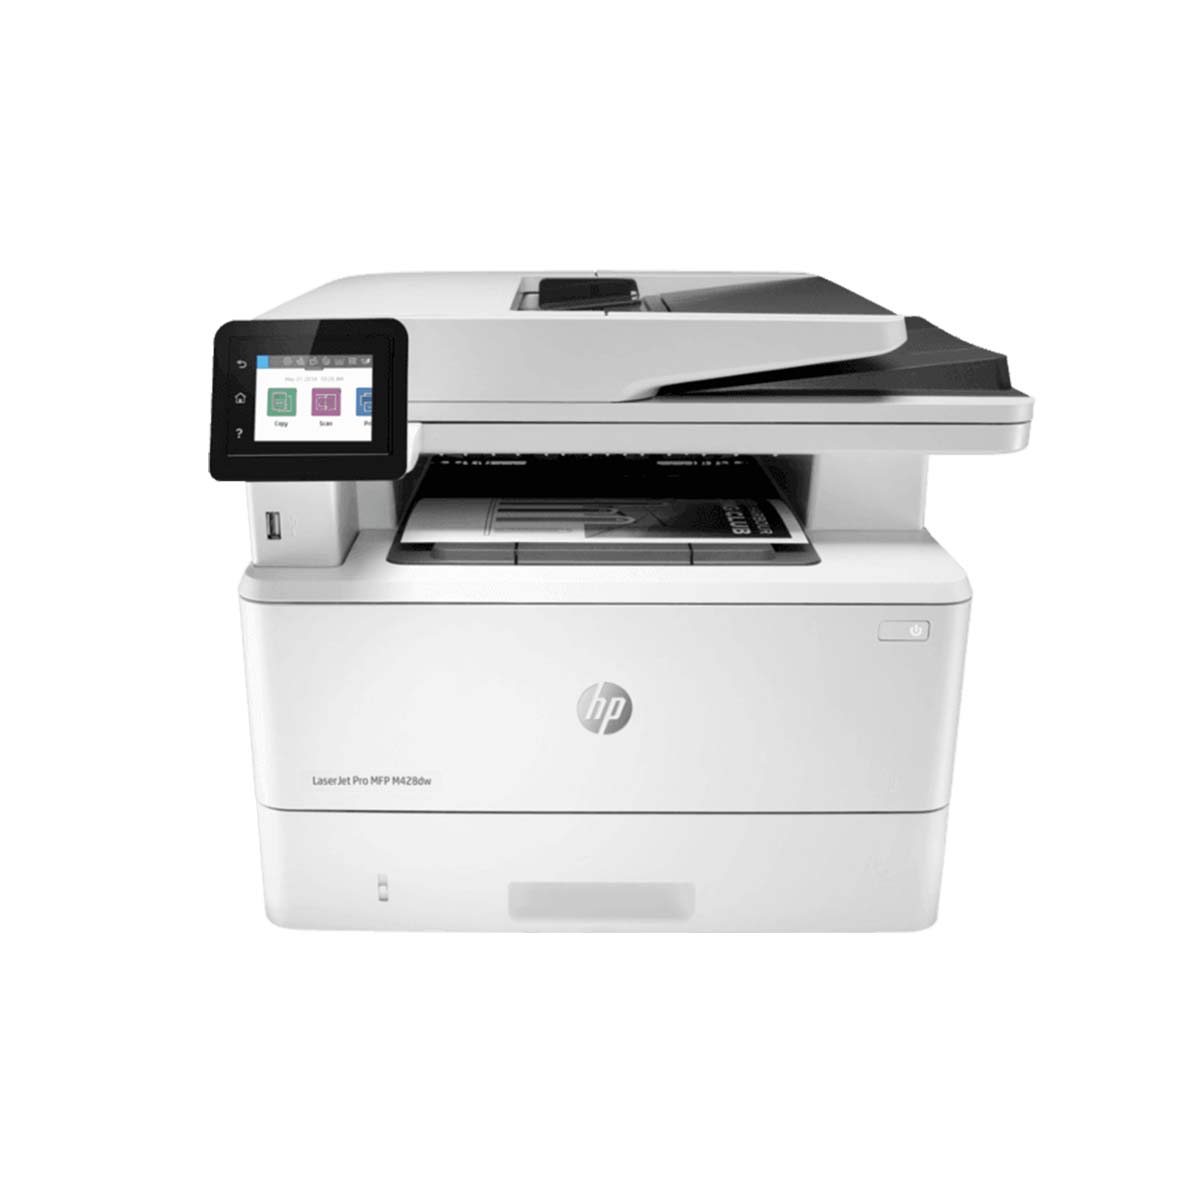 Impresora HP LaserJet Pro M428dw